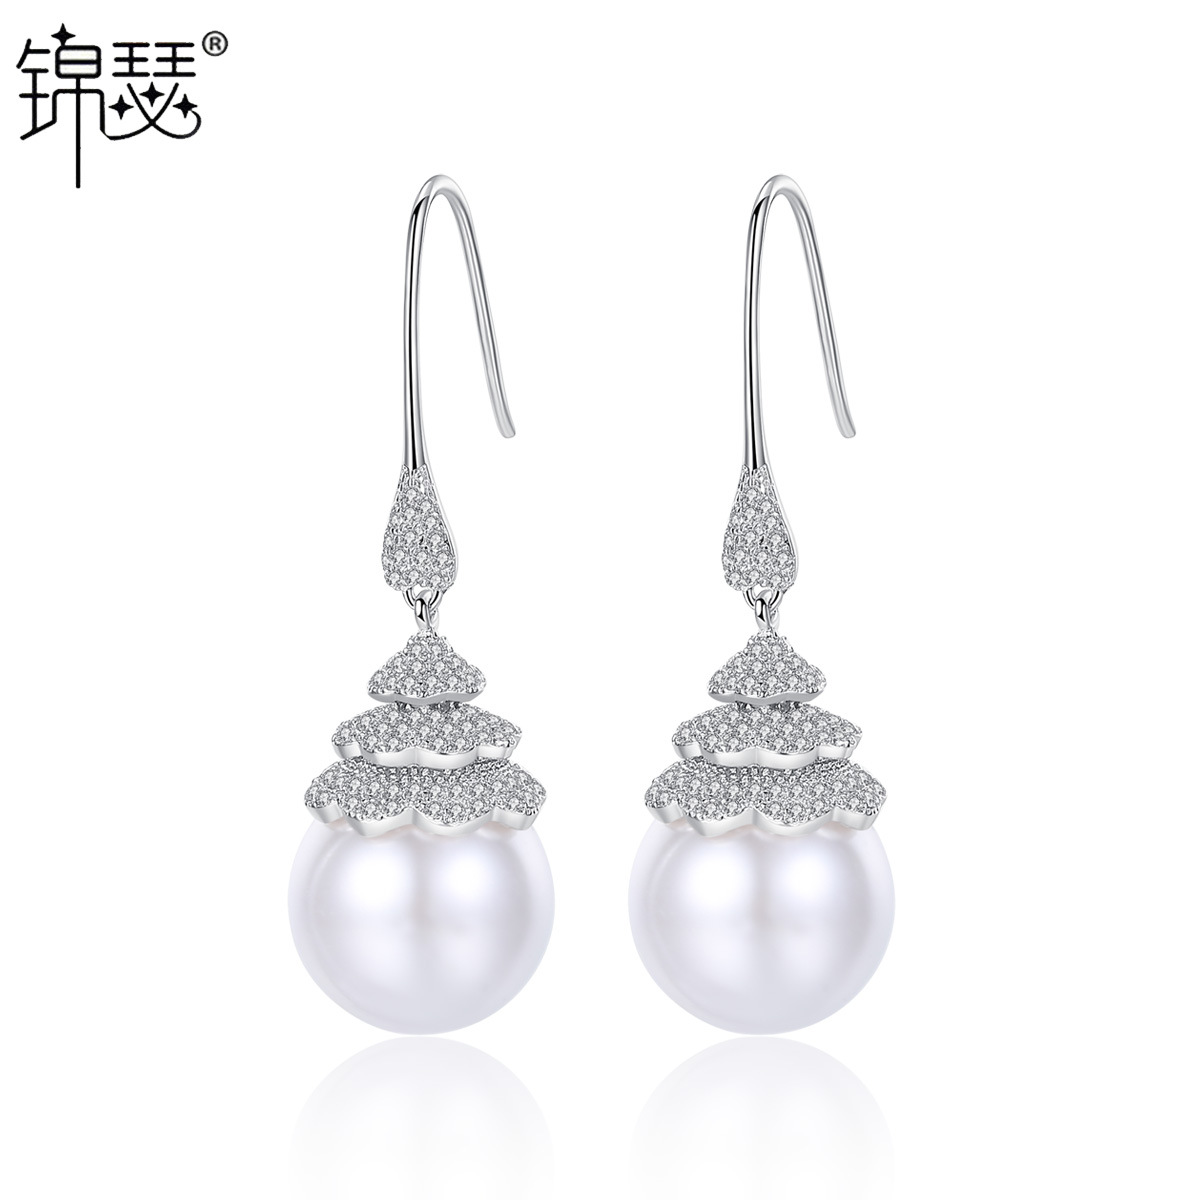 Inlay zircon gift jewelry Korean style banquet earrings